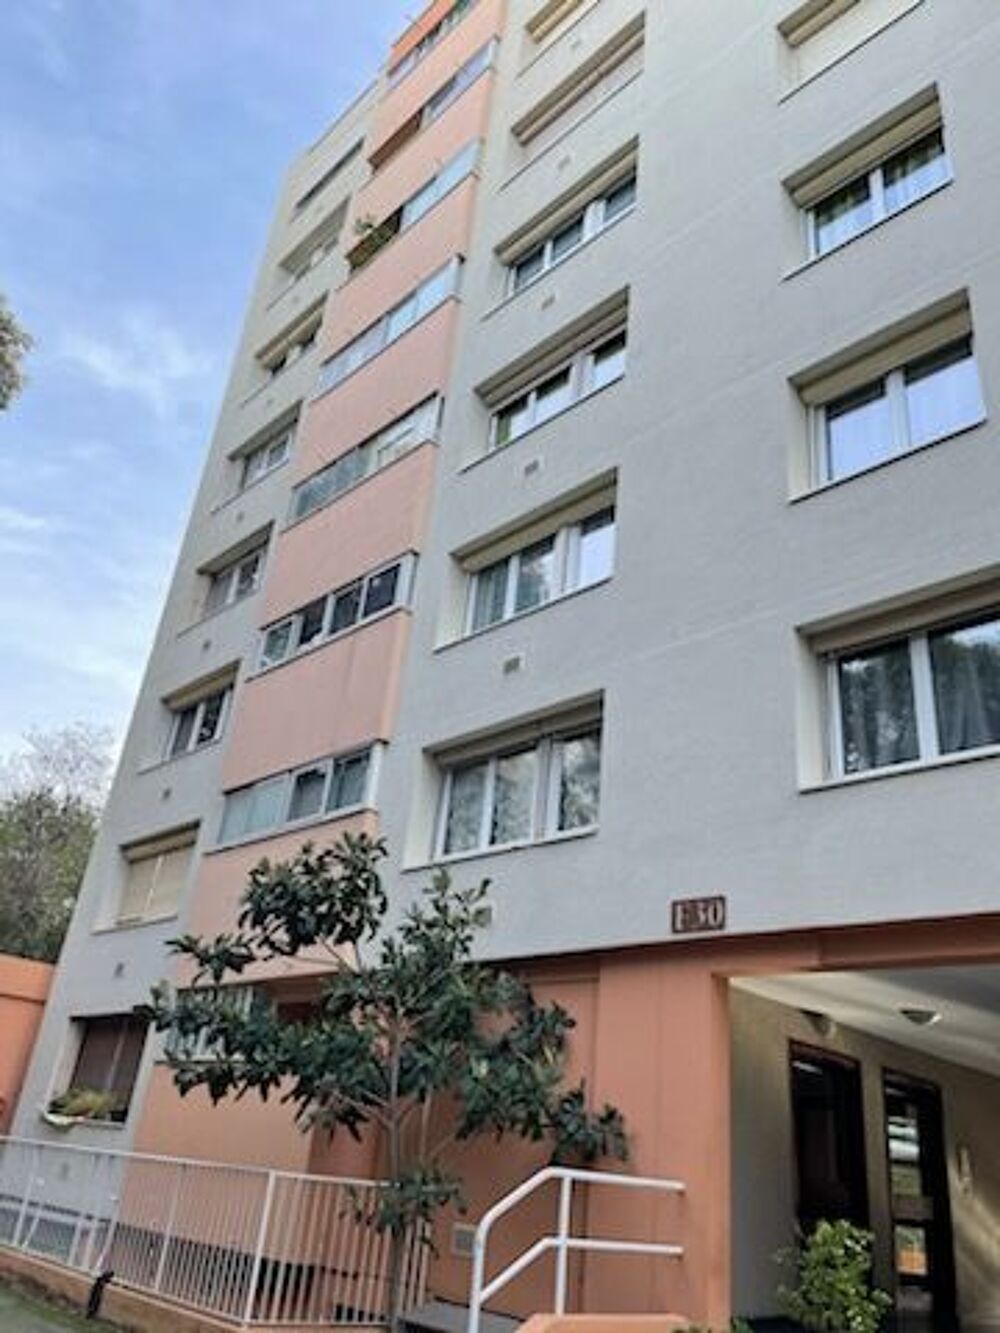 Vente Appartement Spcial investisseur, rapport locatif intressant Marseille 11